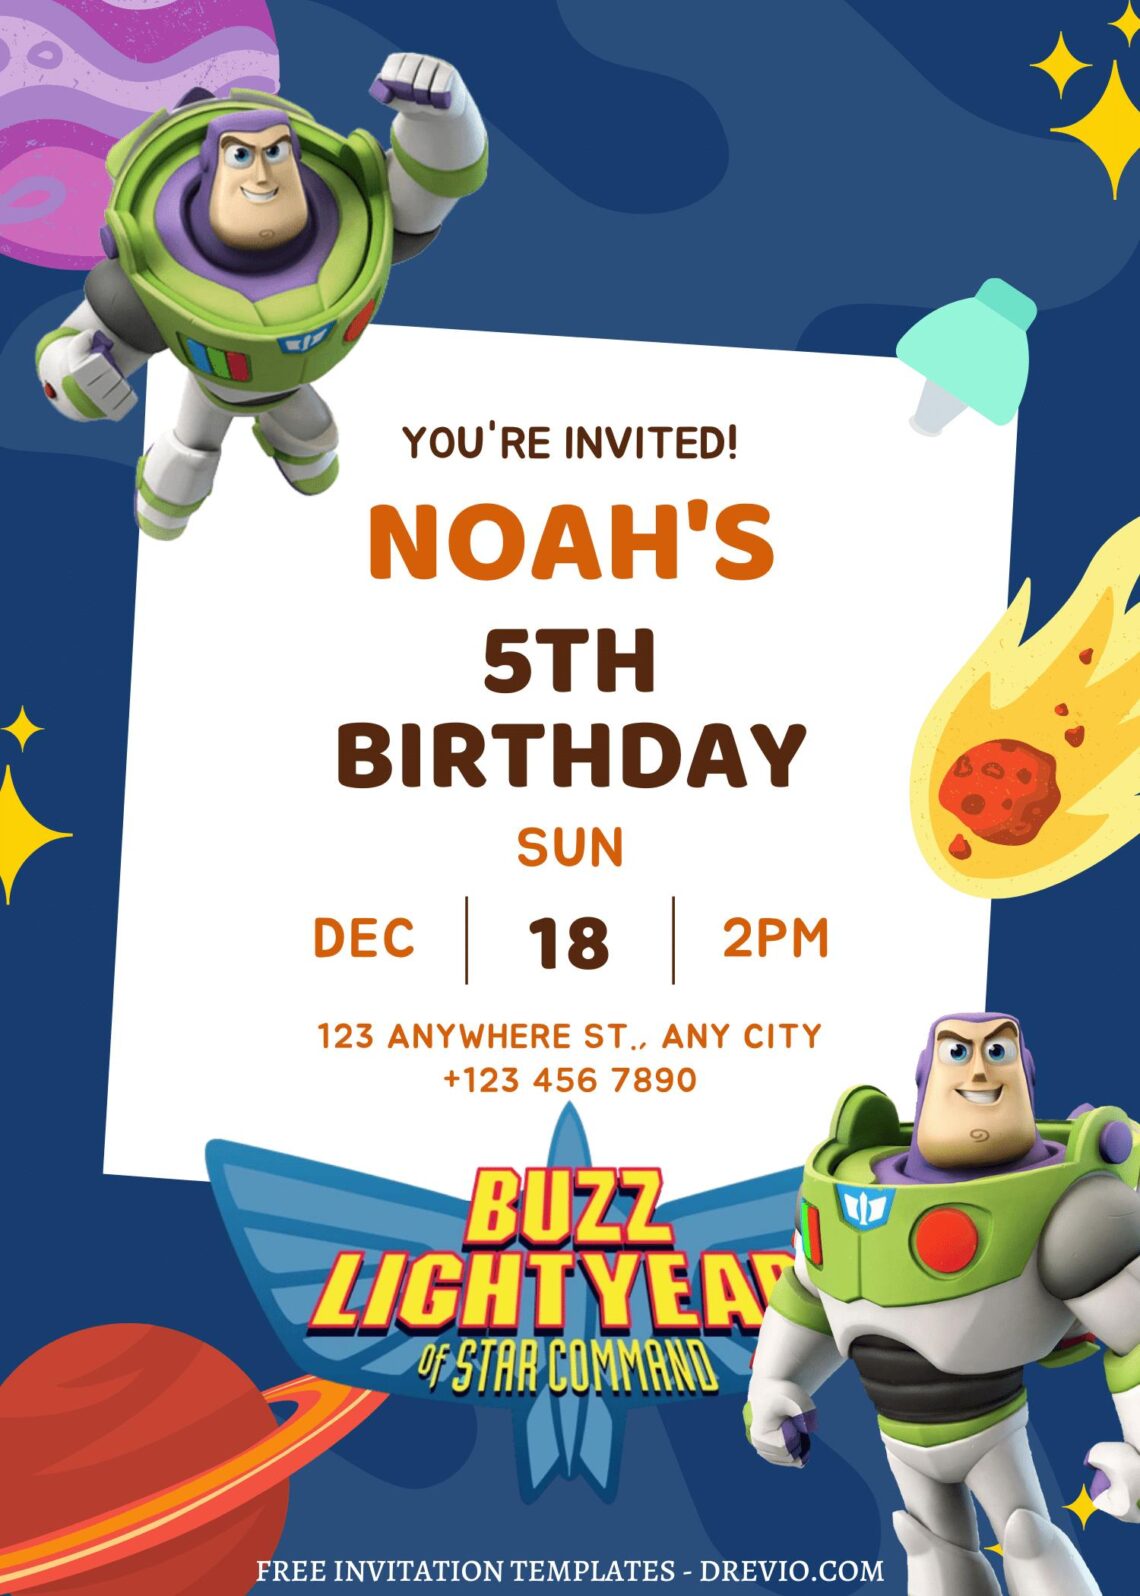 FREE EDITABLE - 8+ Buzz Lightyear Canva Birthday Invitation Templates